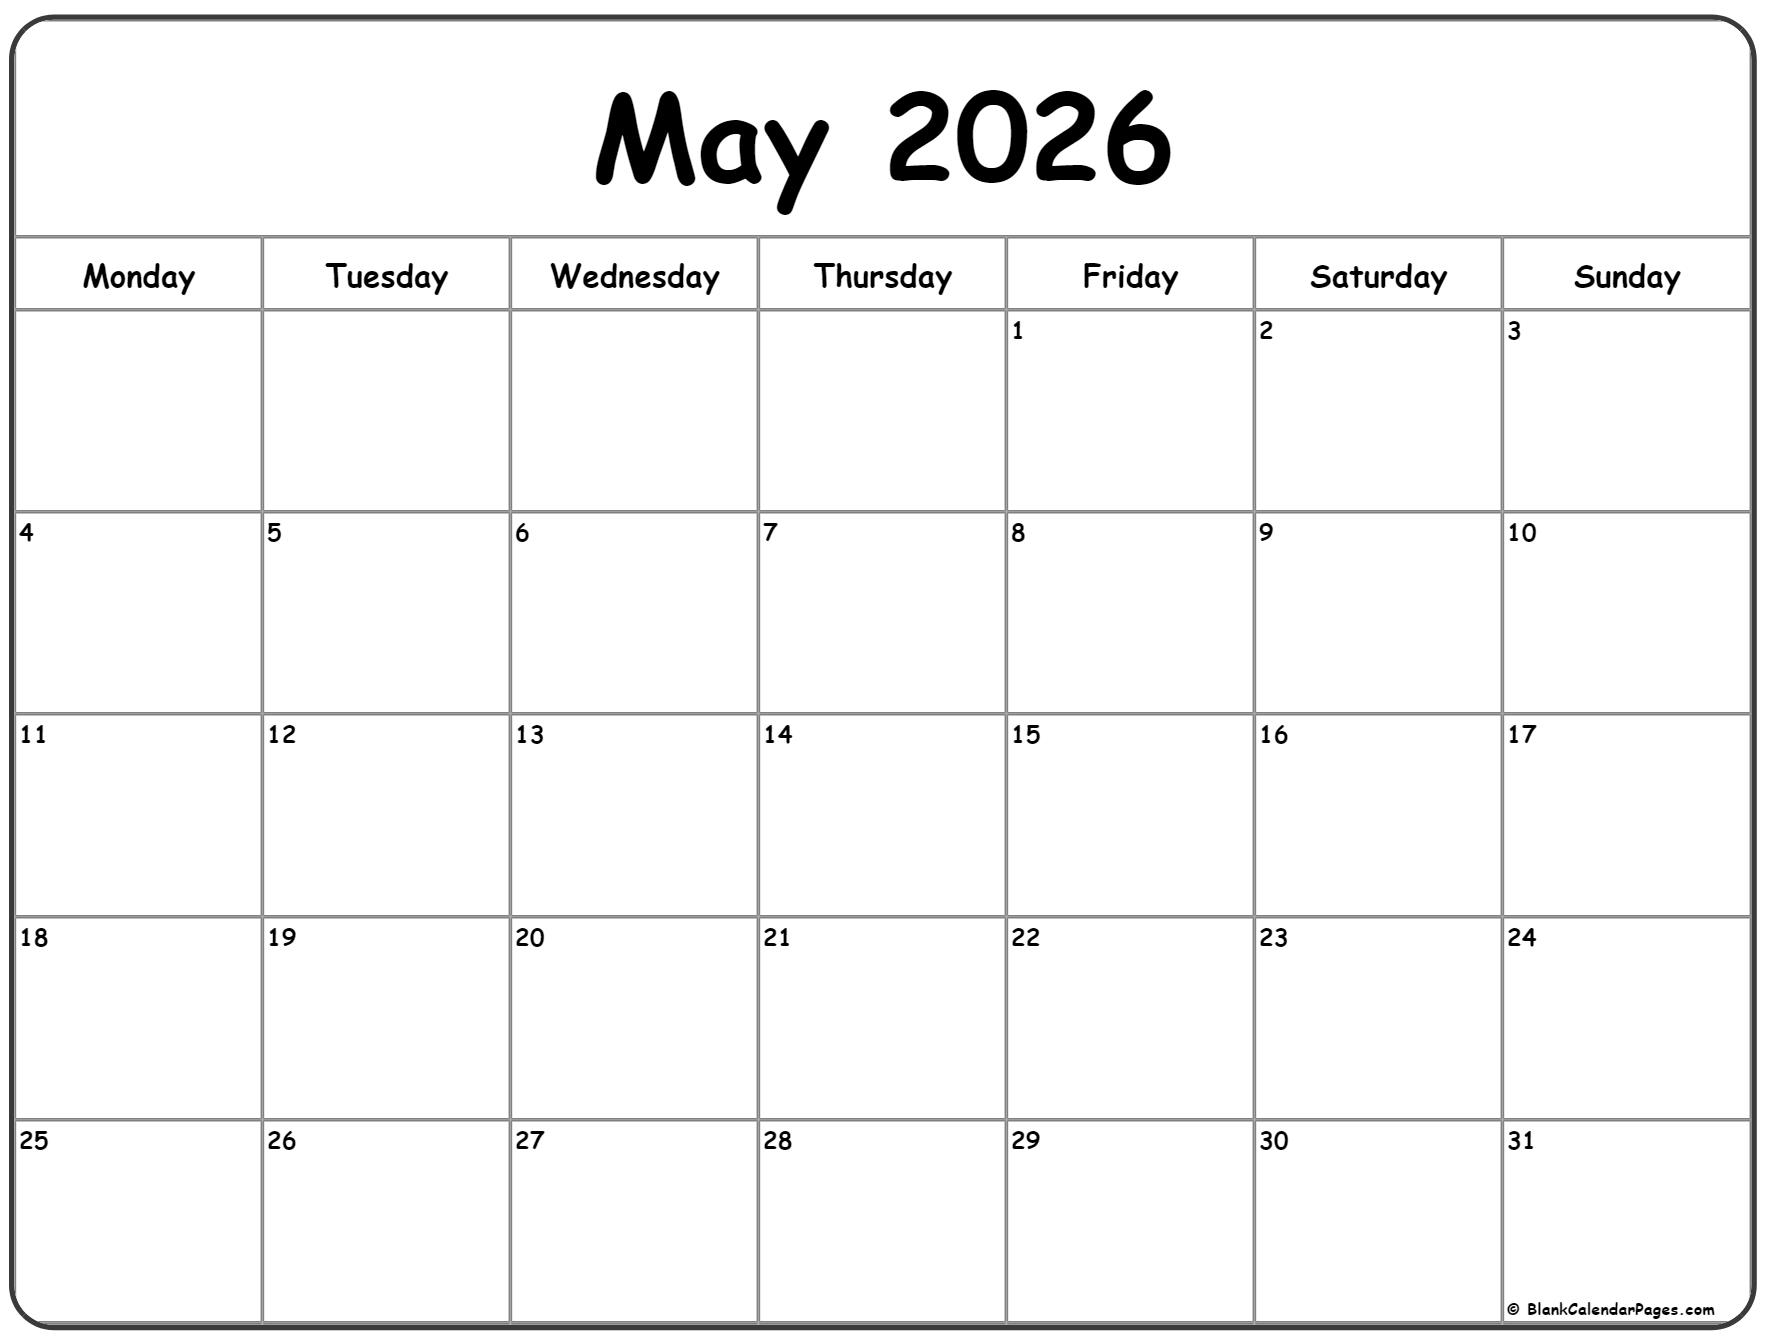 May 2026 Monday calendar. Monday to Sunday